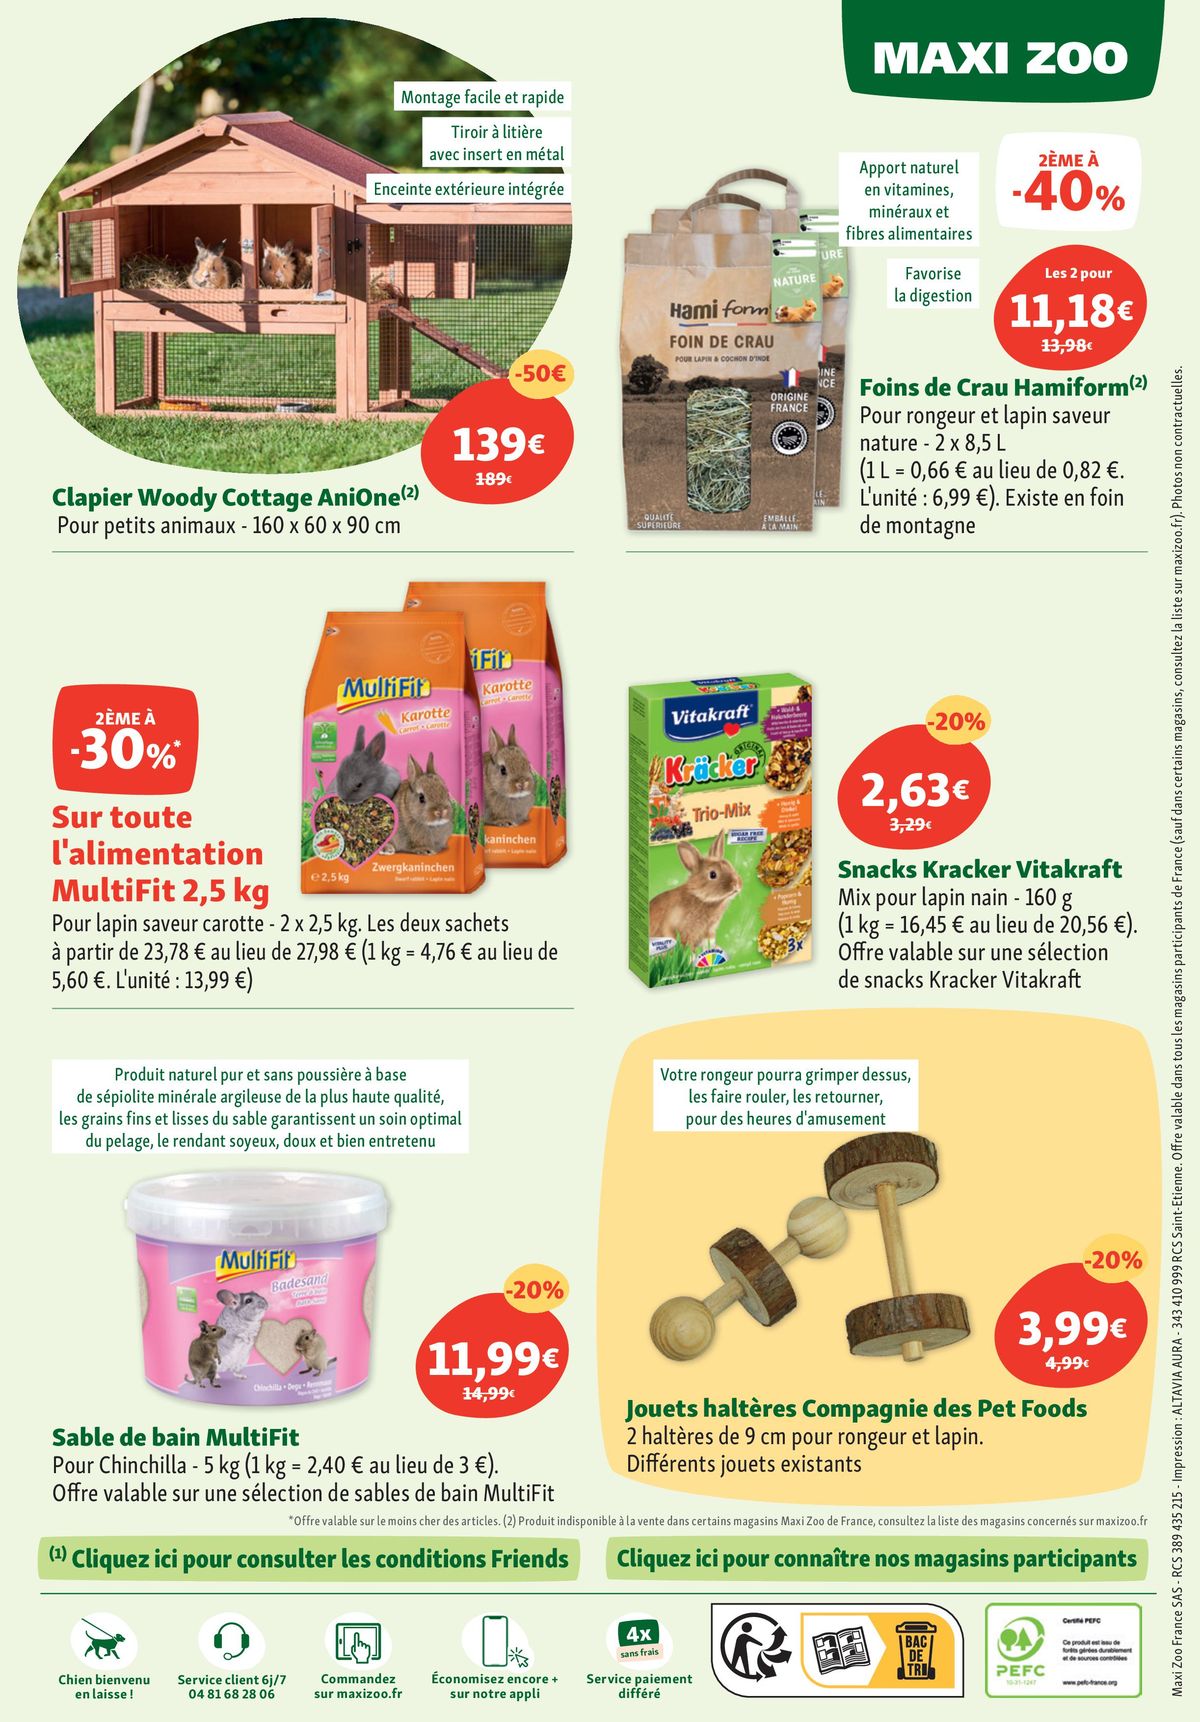 Catalogue Maxi Zoo : Les petits prix sont de sortie !, page 00008